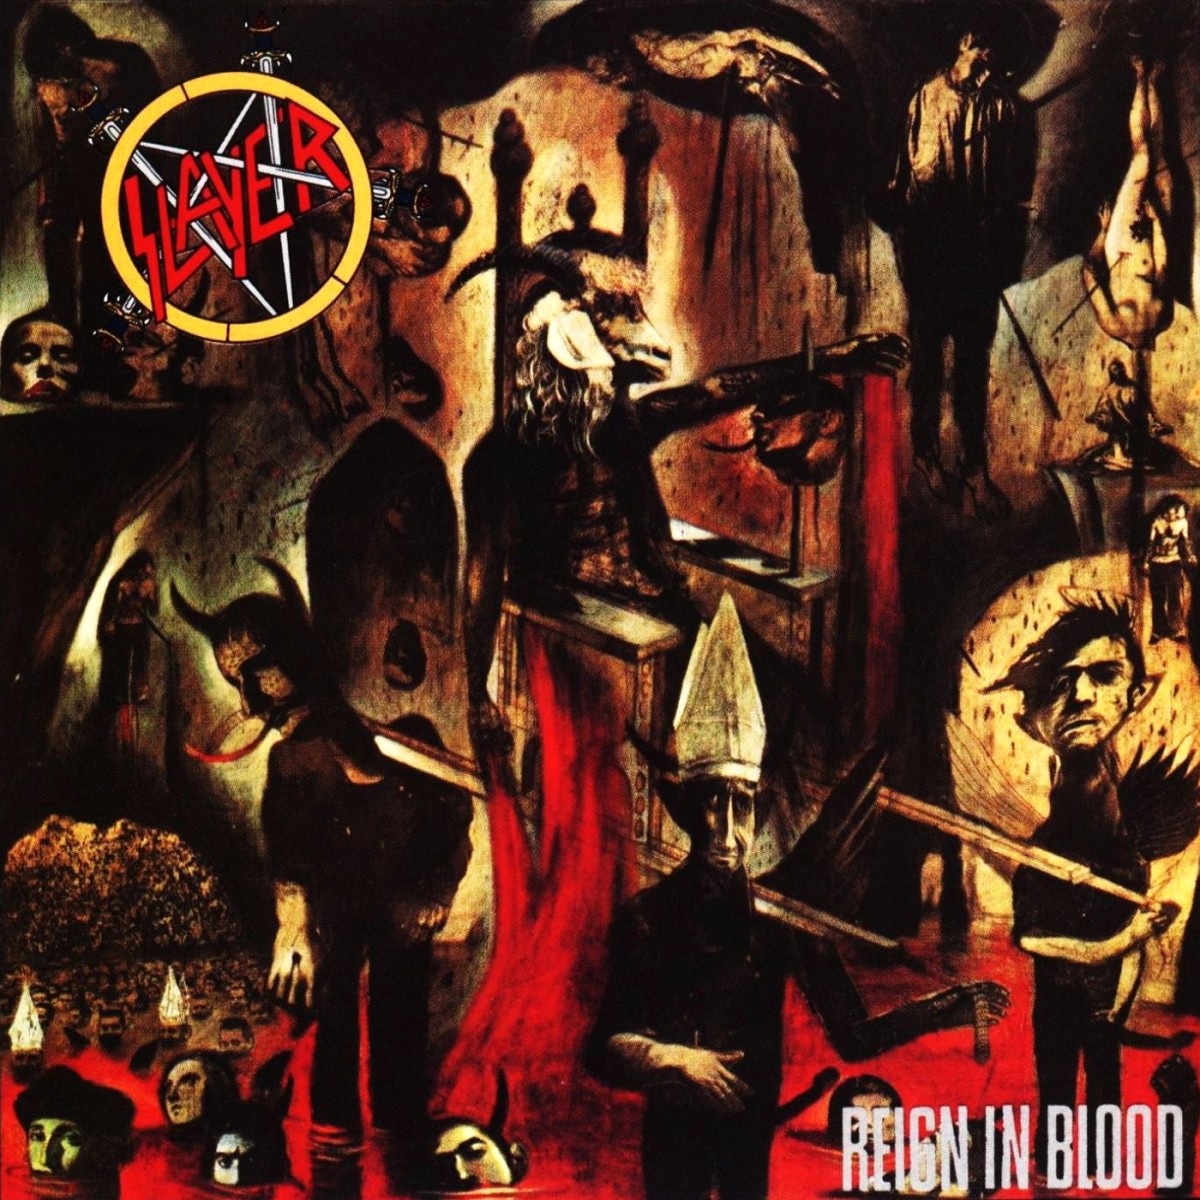 302-Slayer-Reign-in-Blood.jpg